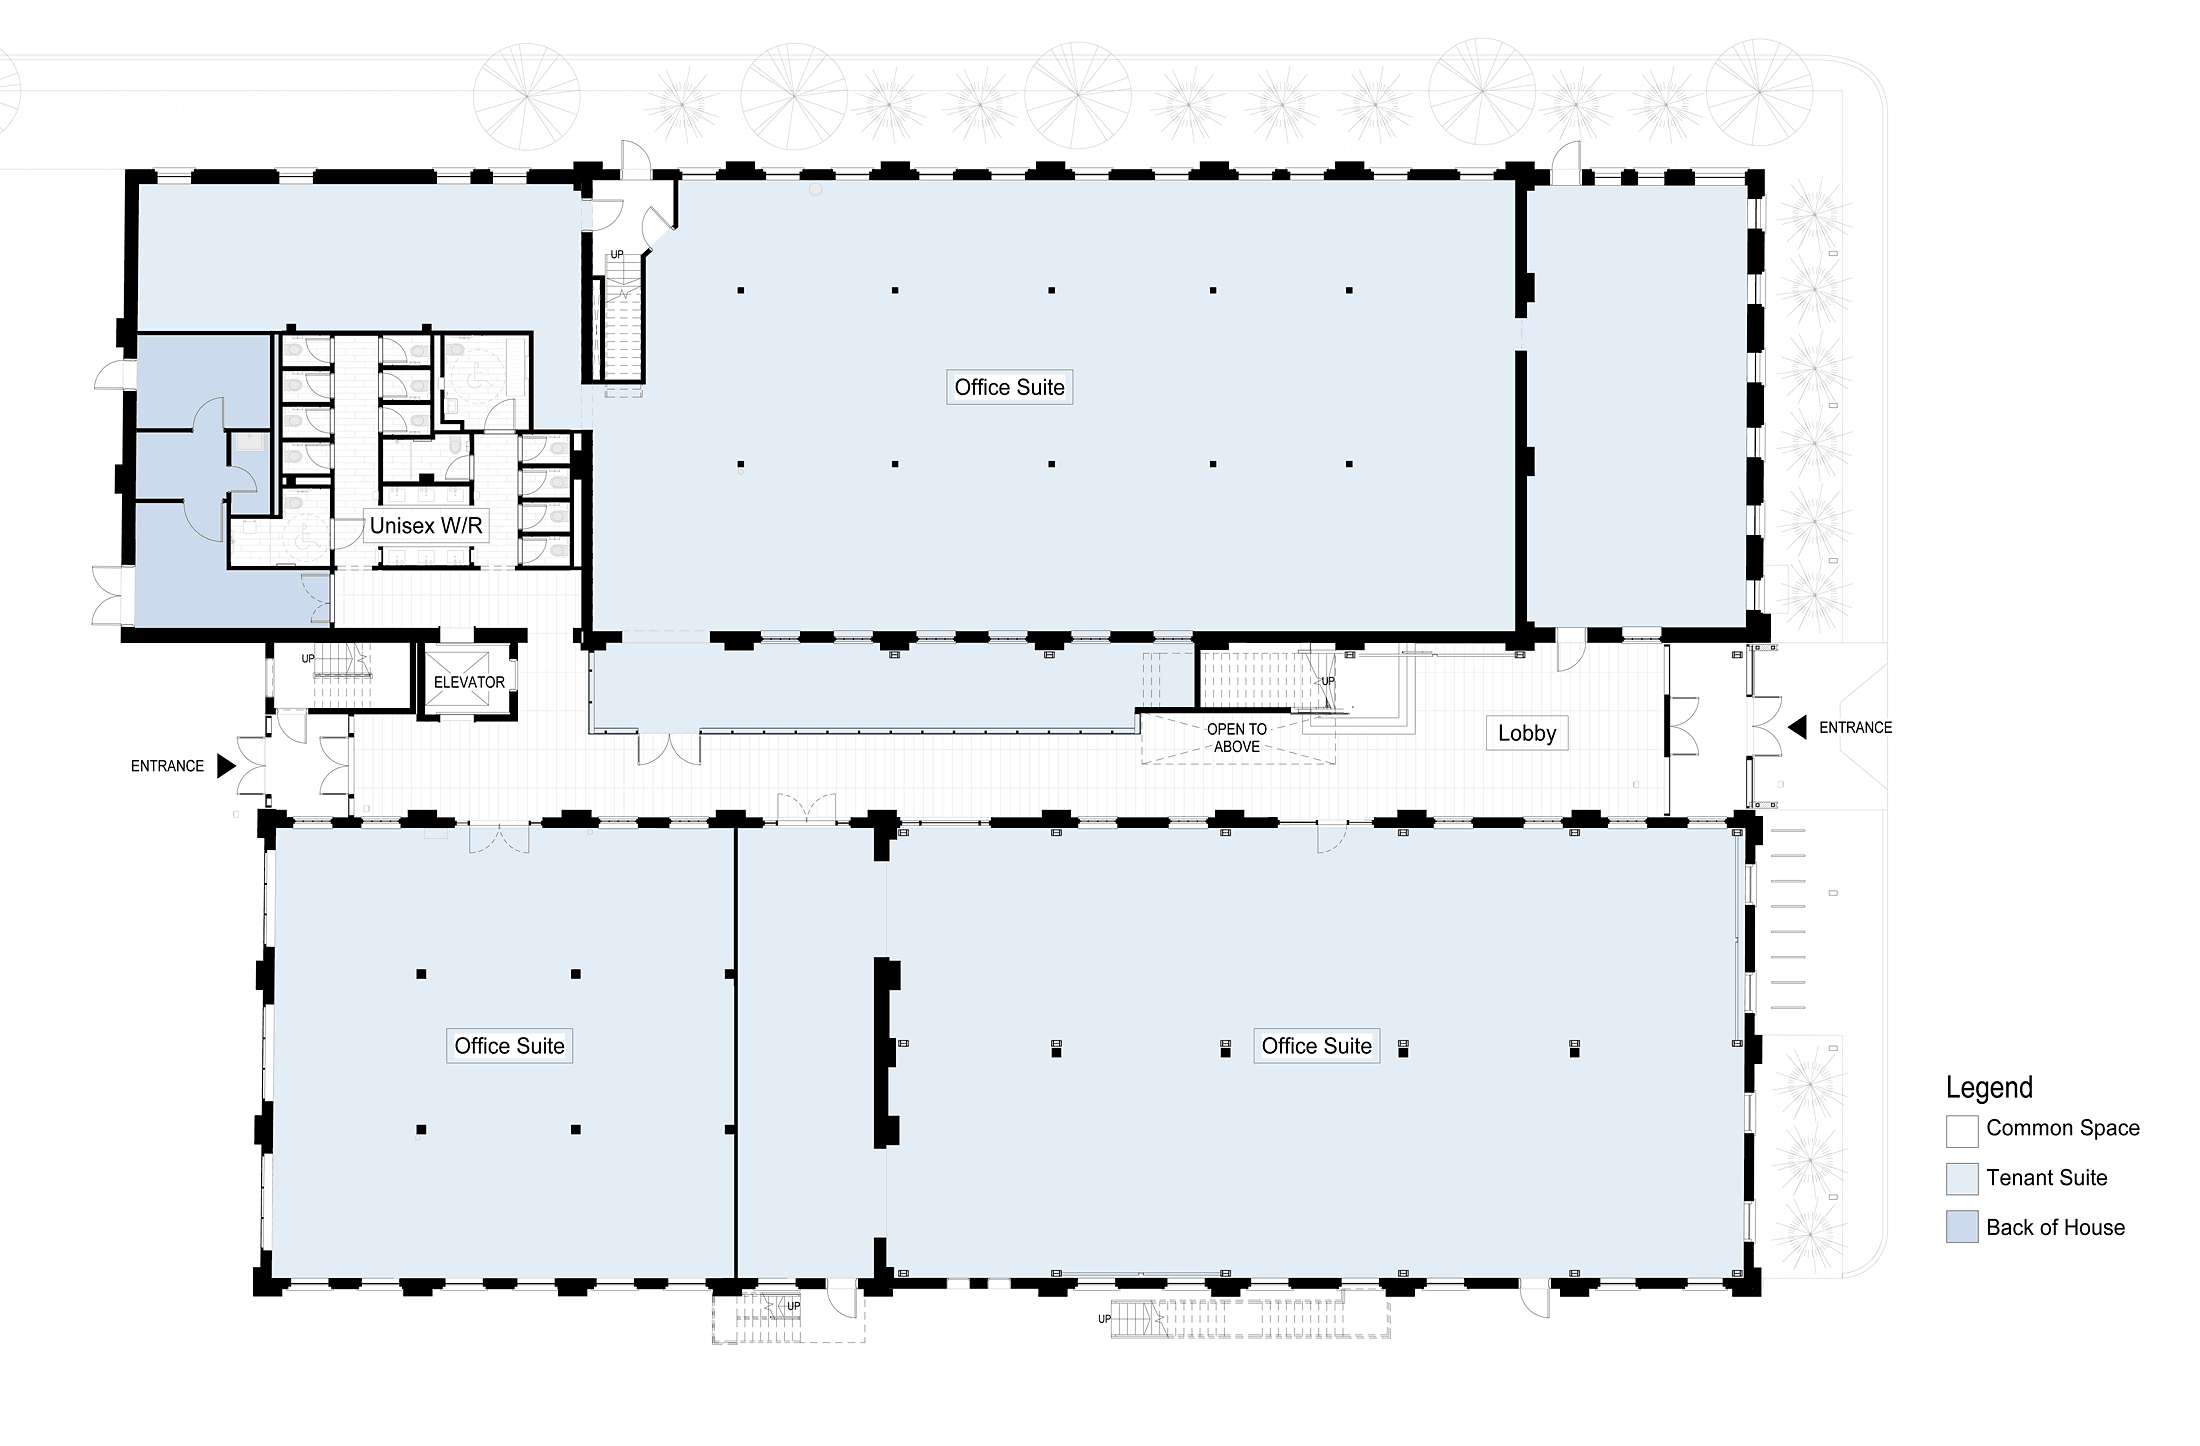 Building A Ground Floor Floorplan